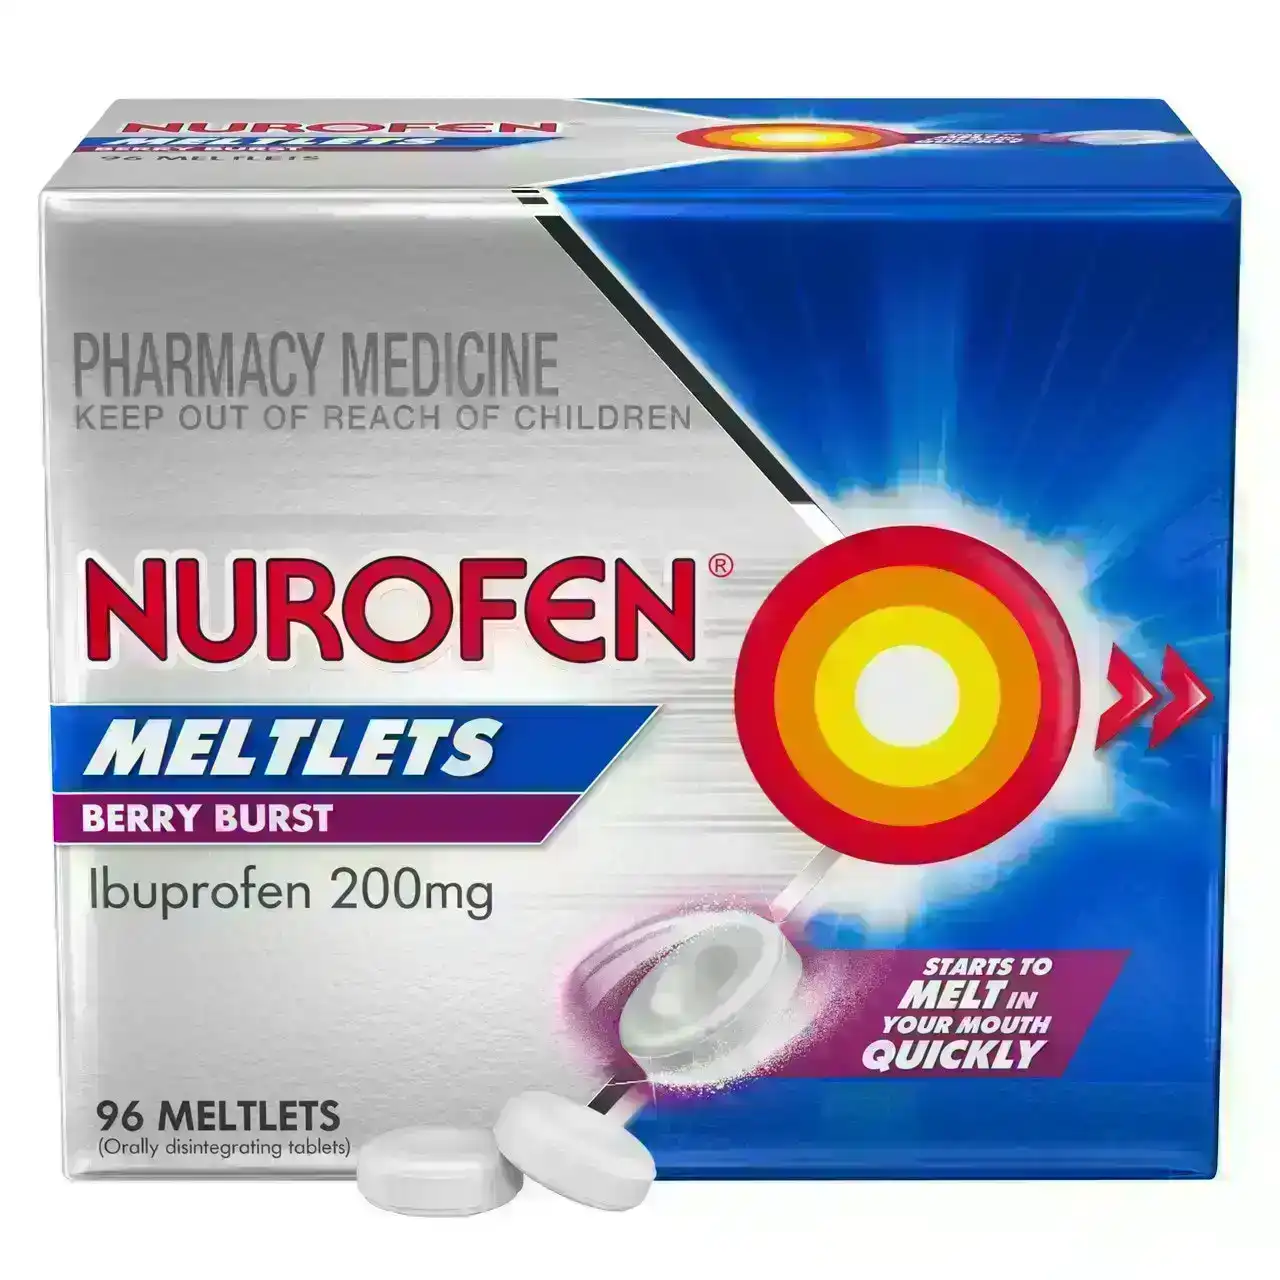 Nurofen Meltlets Pain Relief Berry Burst 200mg Ibuprofen 96 Value Pack